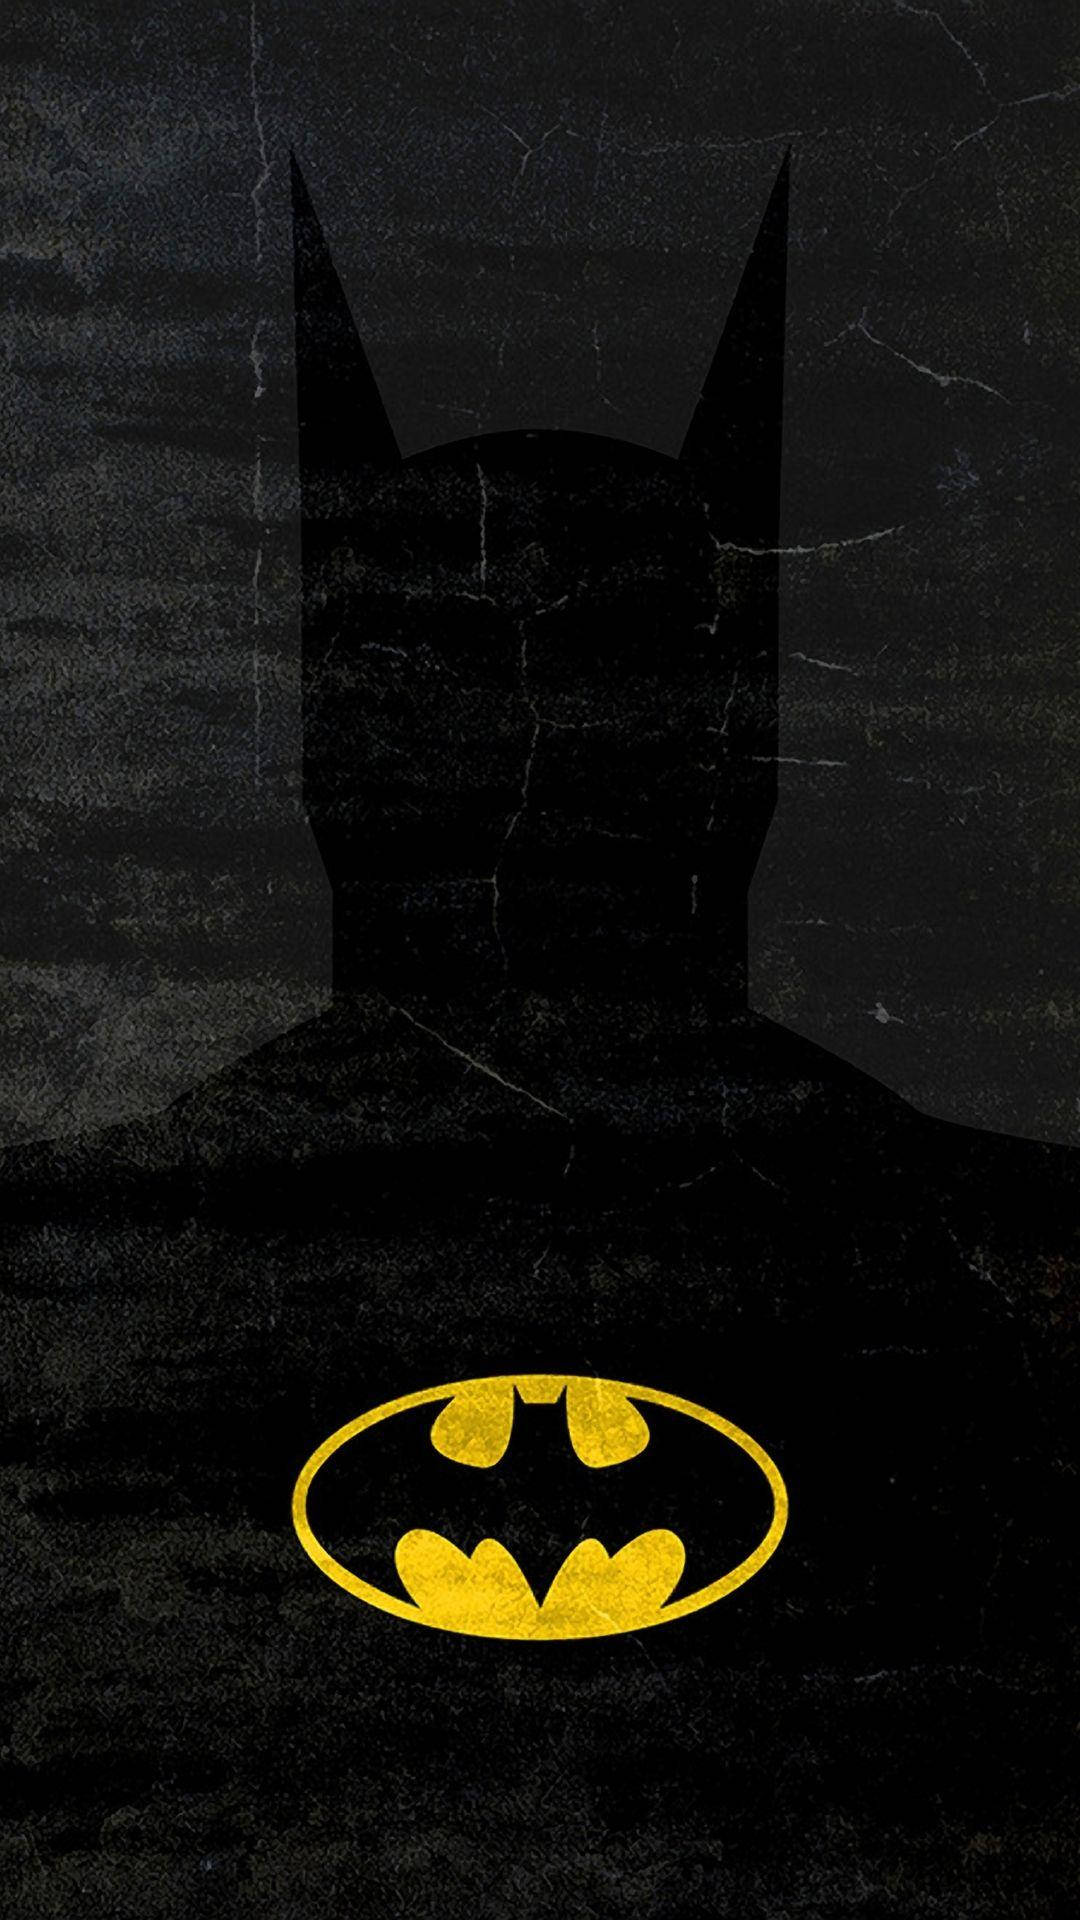 Black and Yellow Batman Dark iPhone Wallpaper